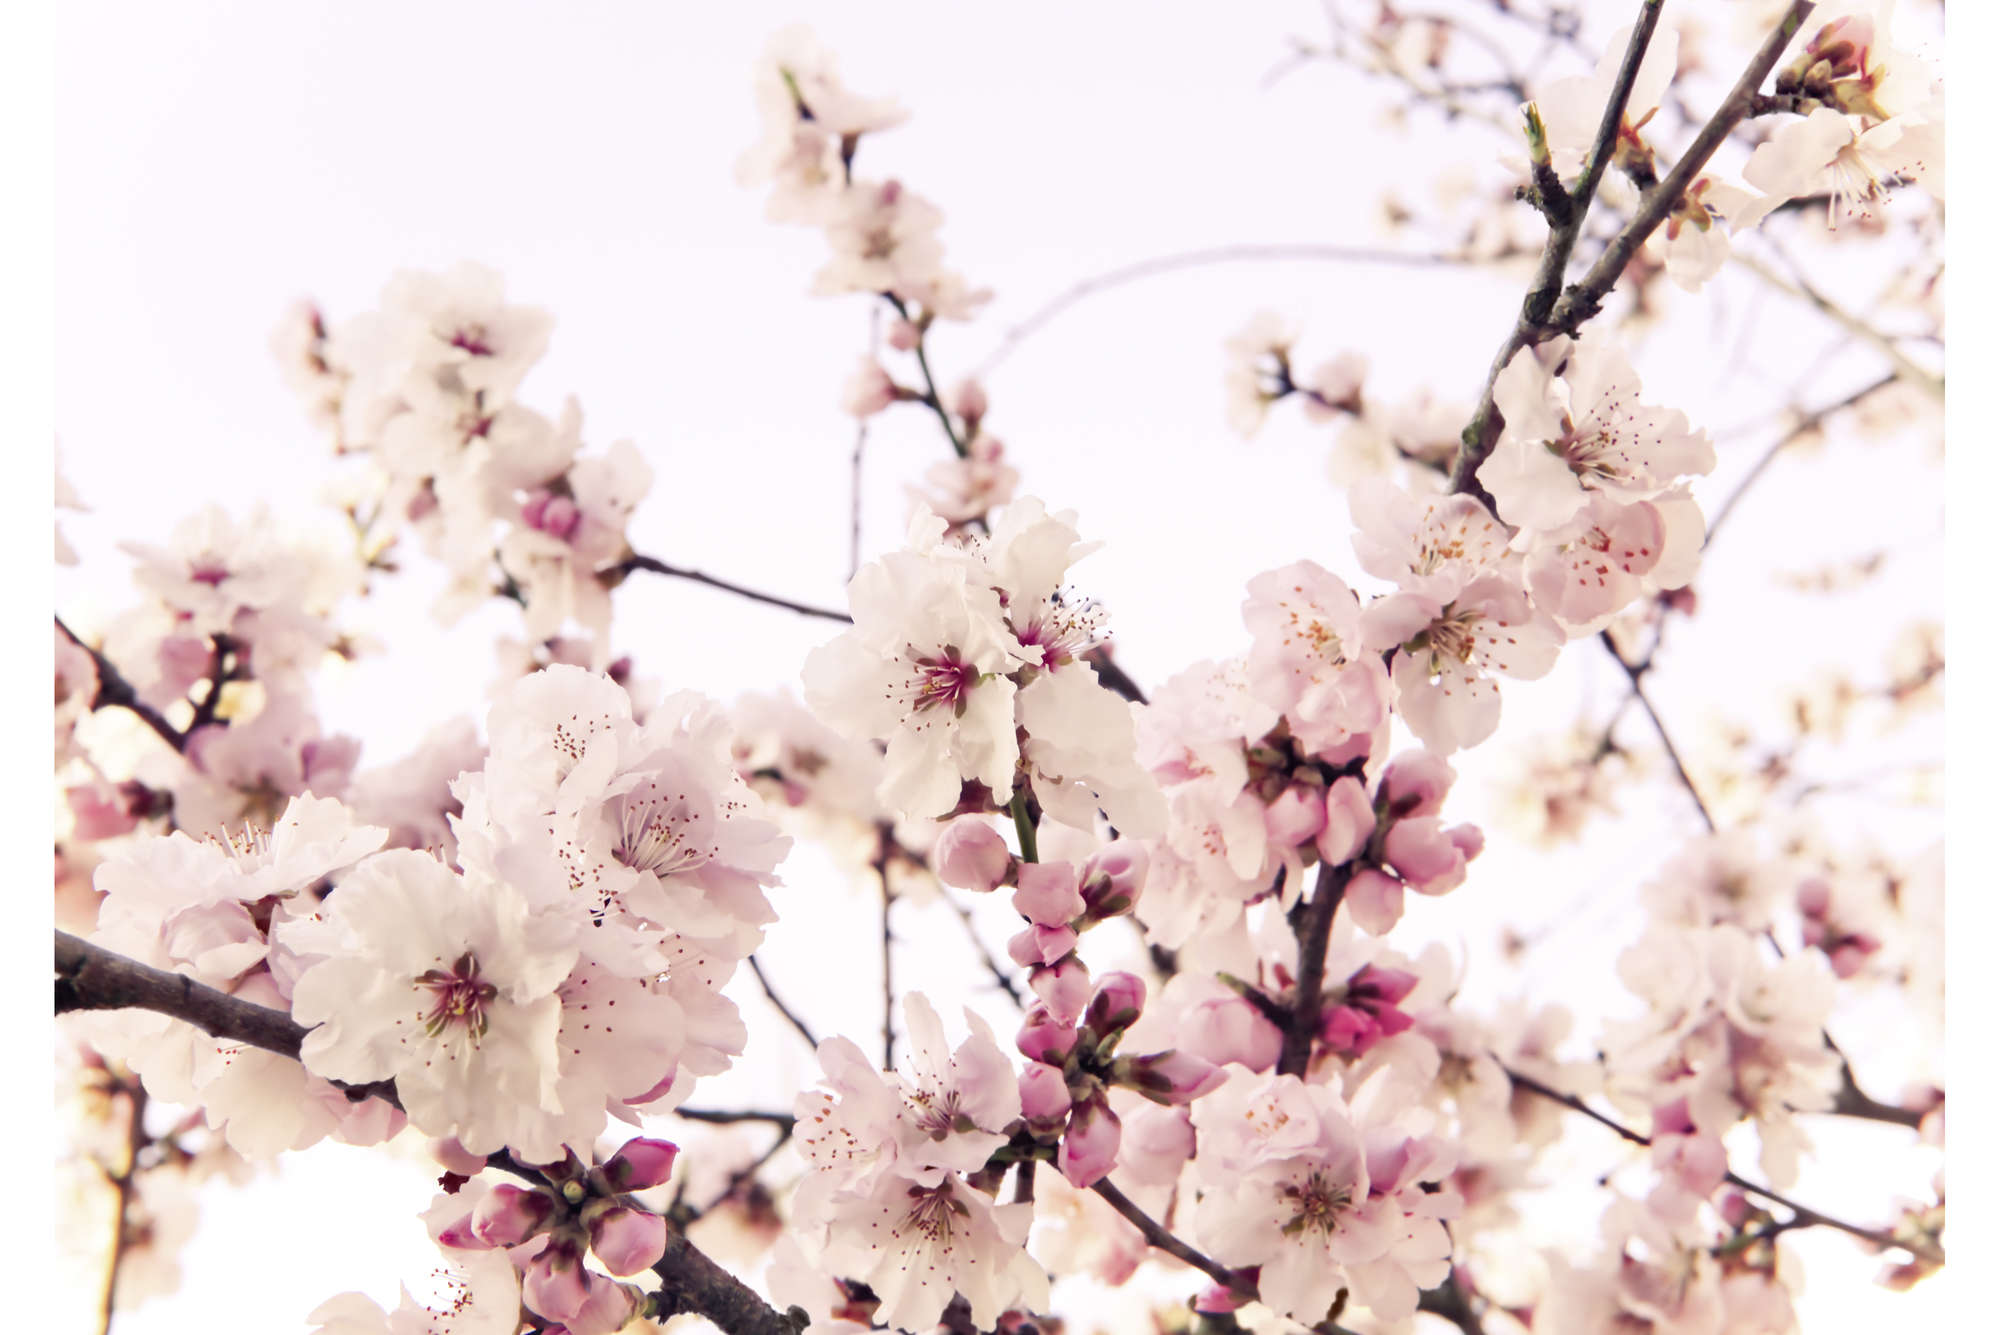             Natur Fototapete mit Kirschblüten – Mattes Glattvlies
        